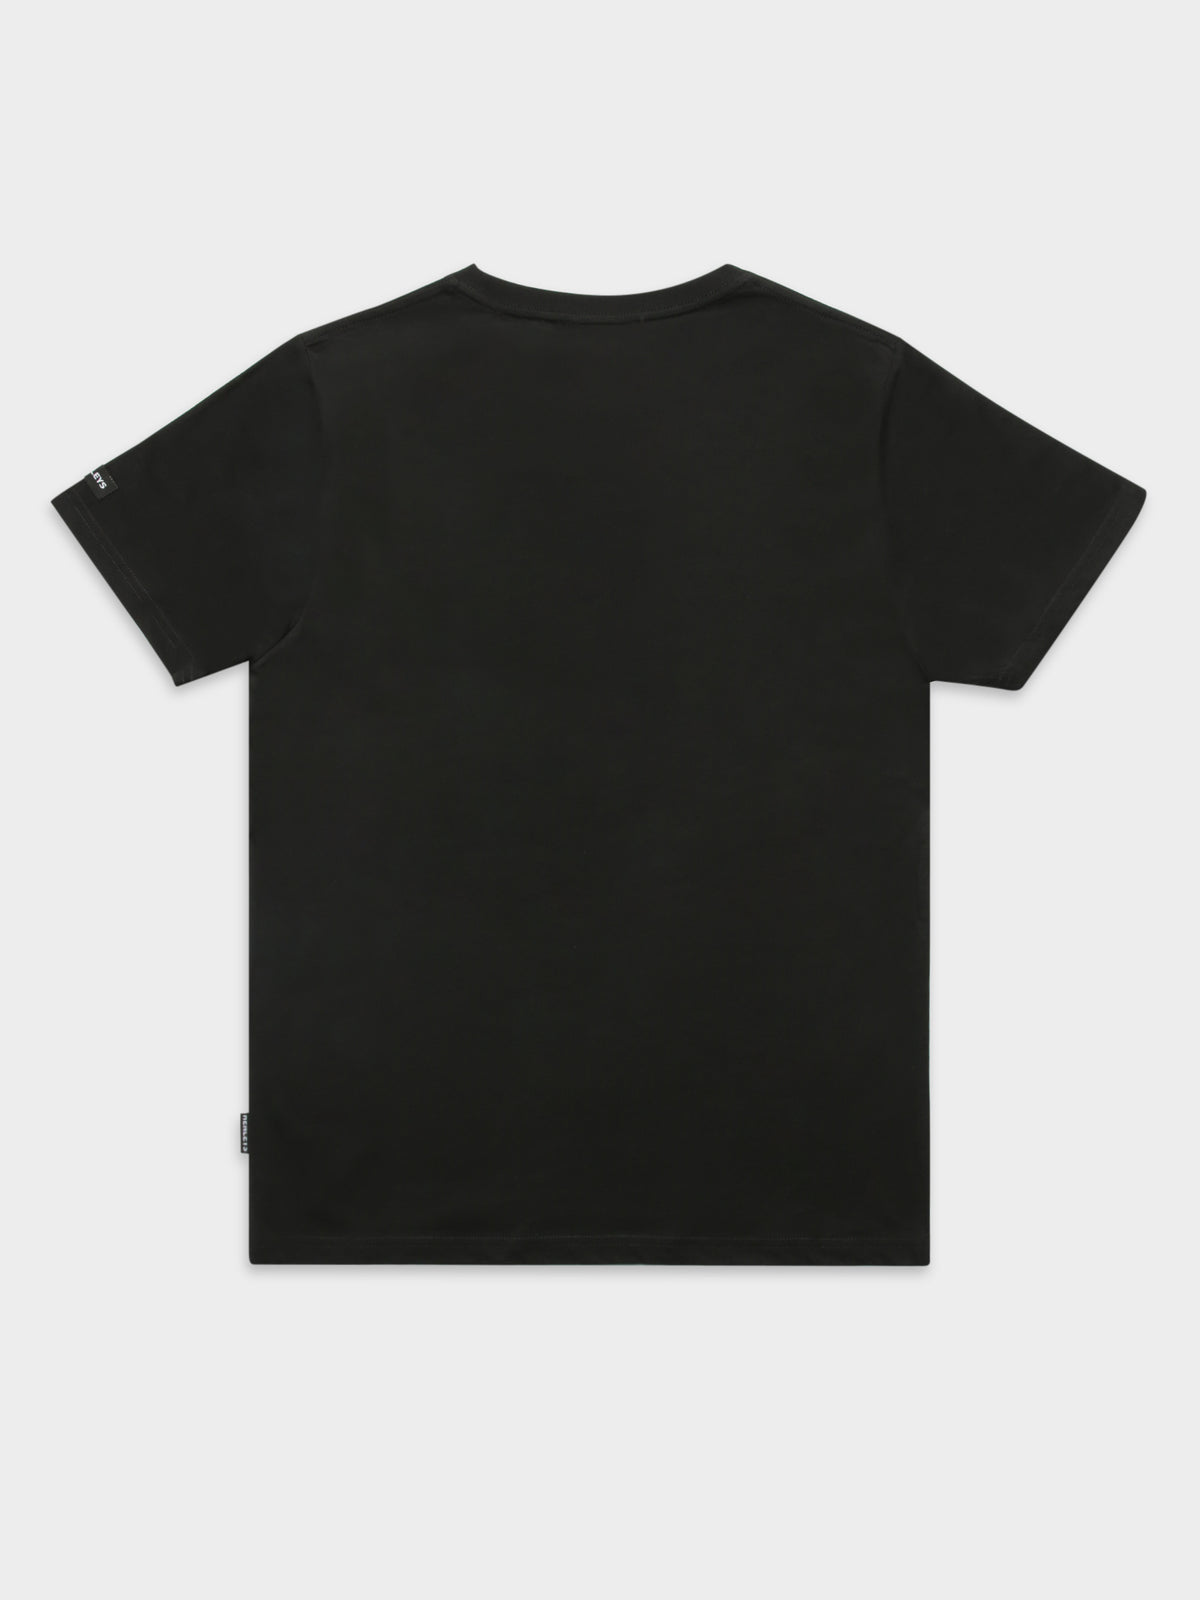 Jenkins T-Shirt in Black